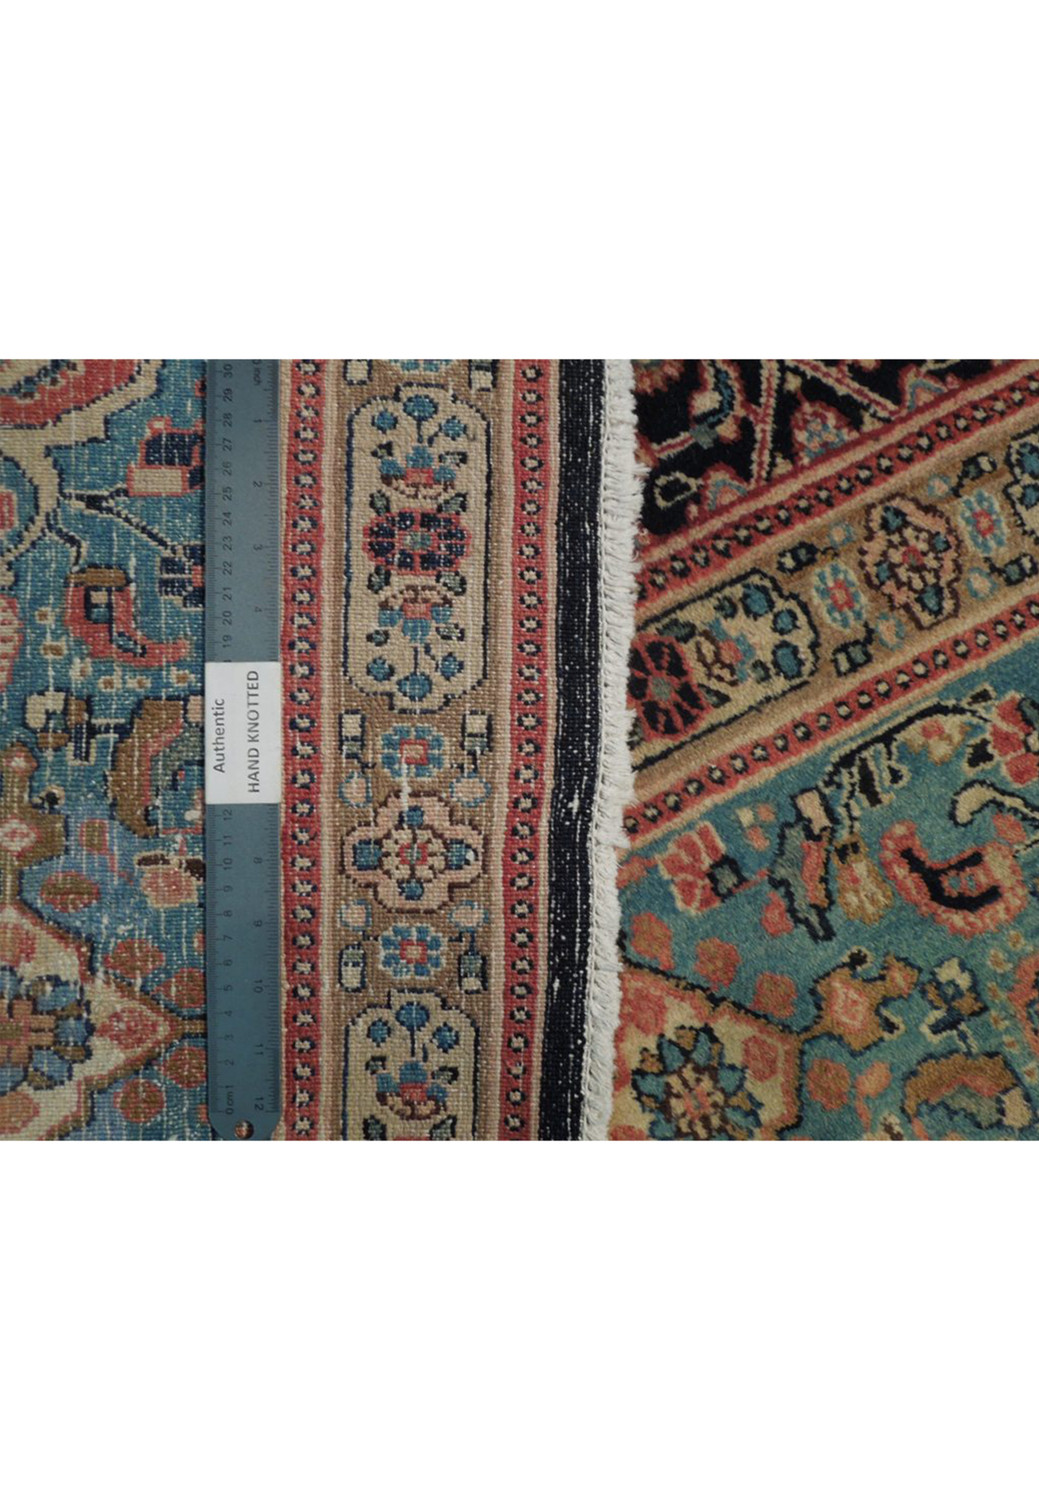 Large 10x13 Persian Bijar Rug with semi-antique charm and durable weave."


Large 10x13 Persian Bijar Rug with semi-antique charm and durable weave.